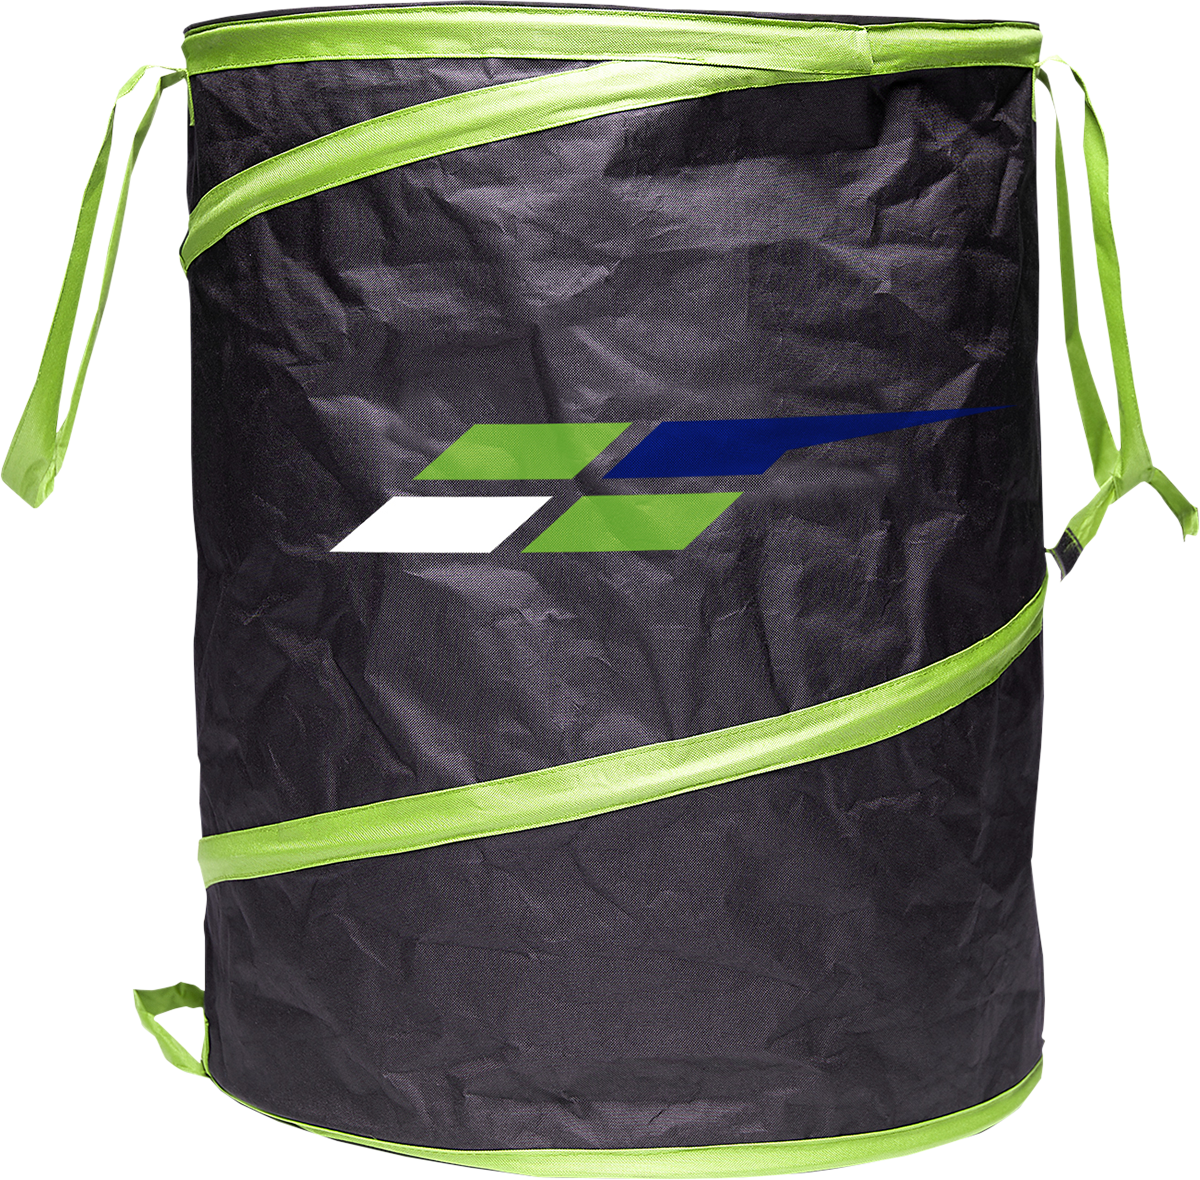 FACTORY EFFEX Trash Can - Black/Green - Kawasaki 22-45160